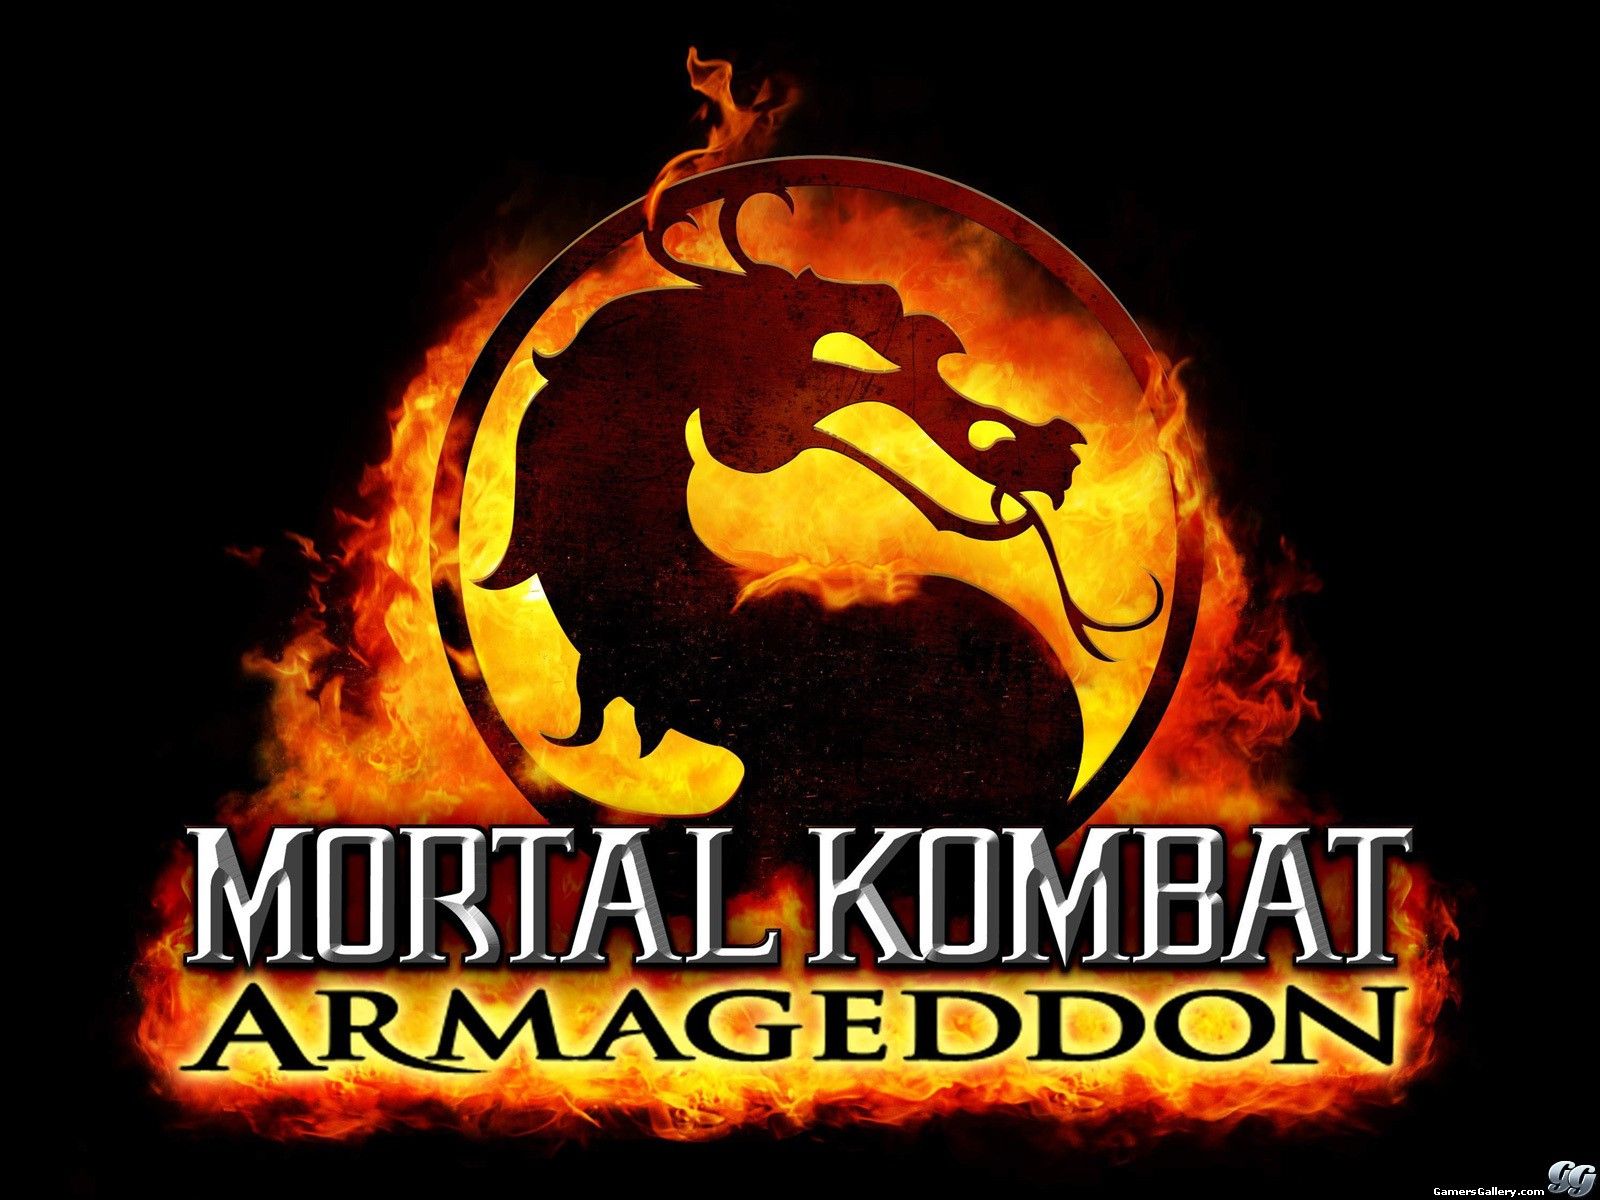 Gamers Gallery Kombat: Armageddon (Exclusive Wallpaper)